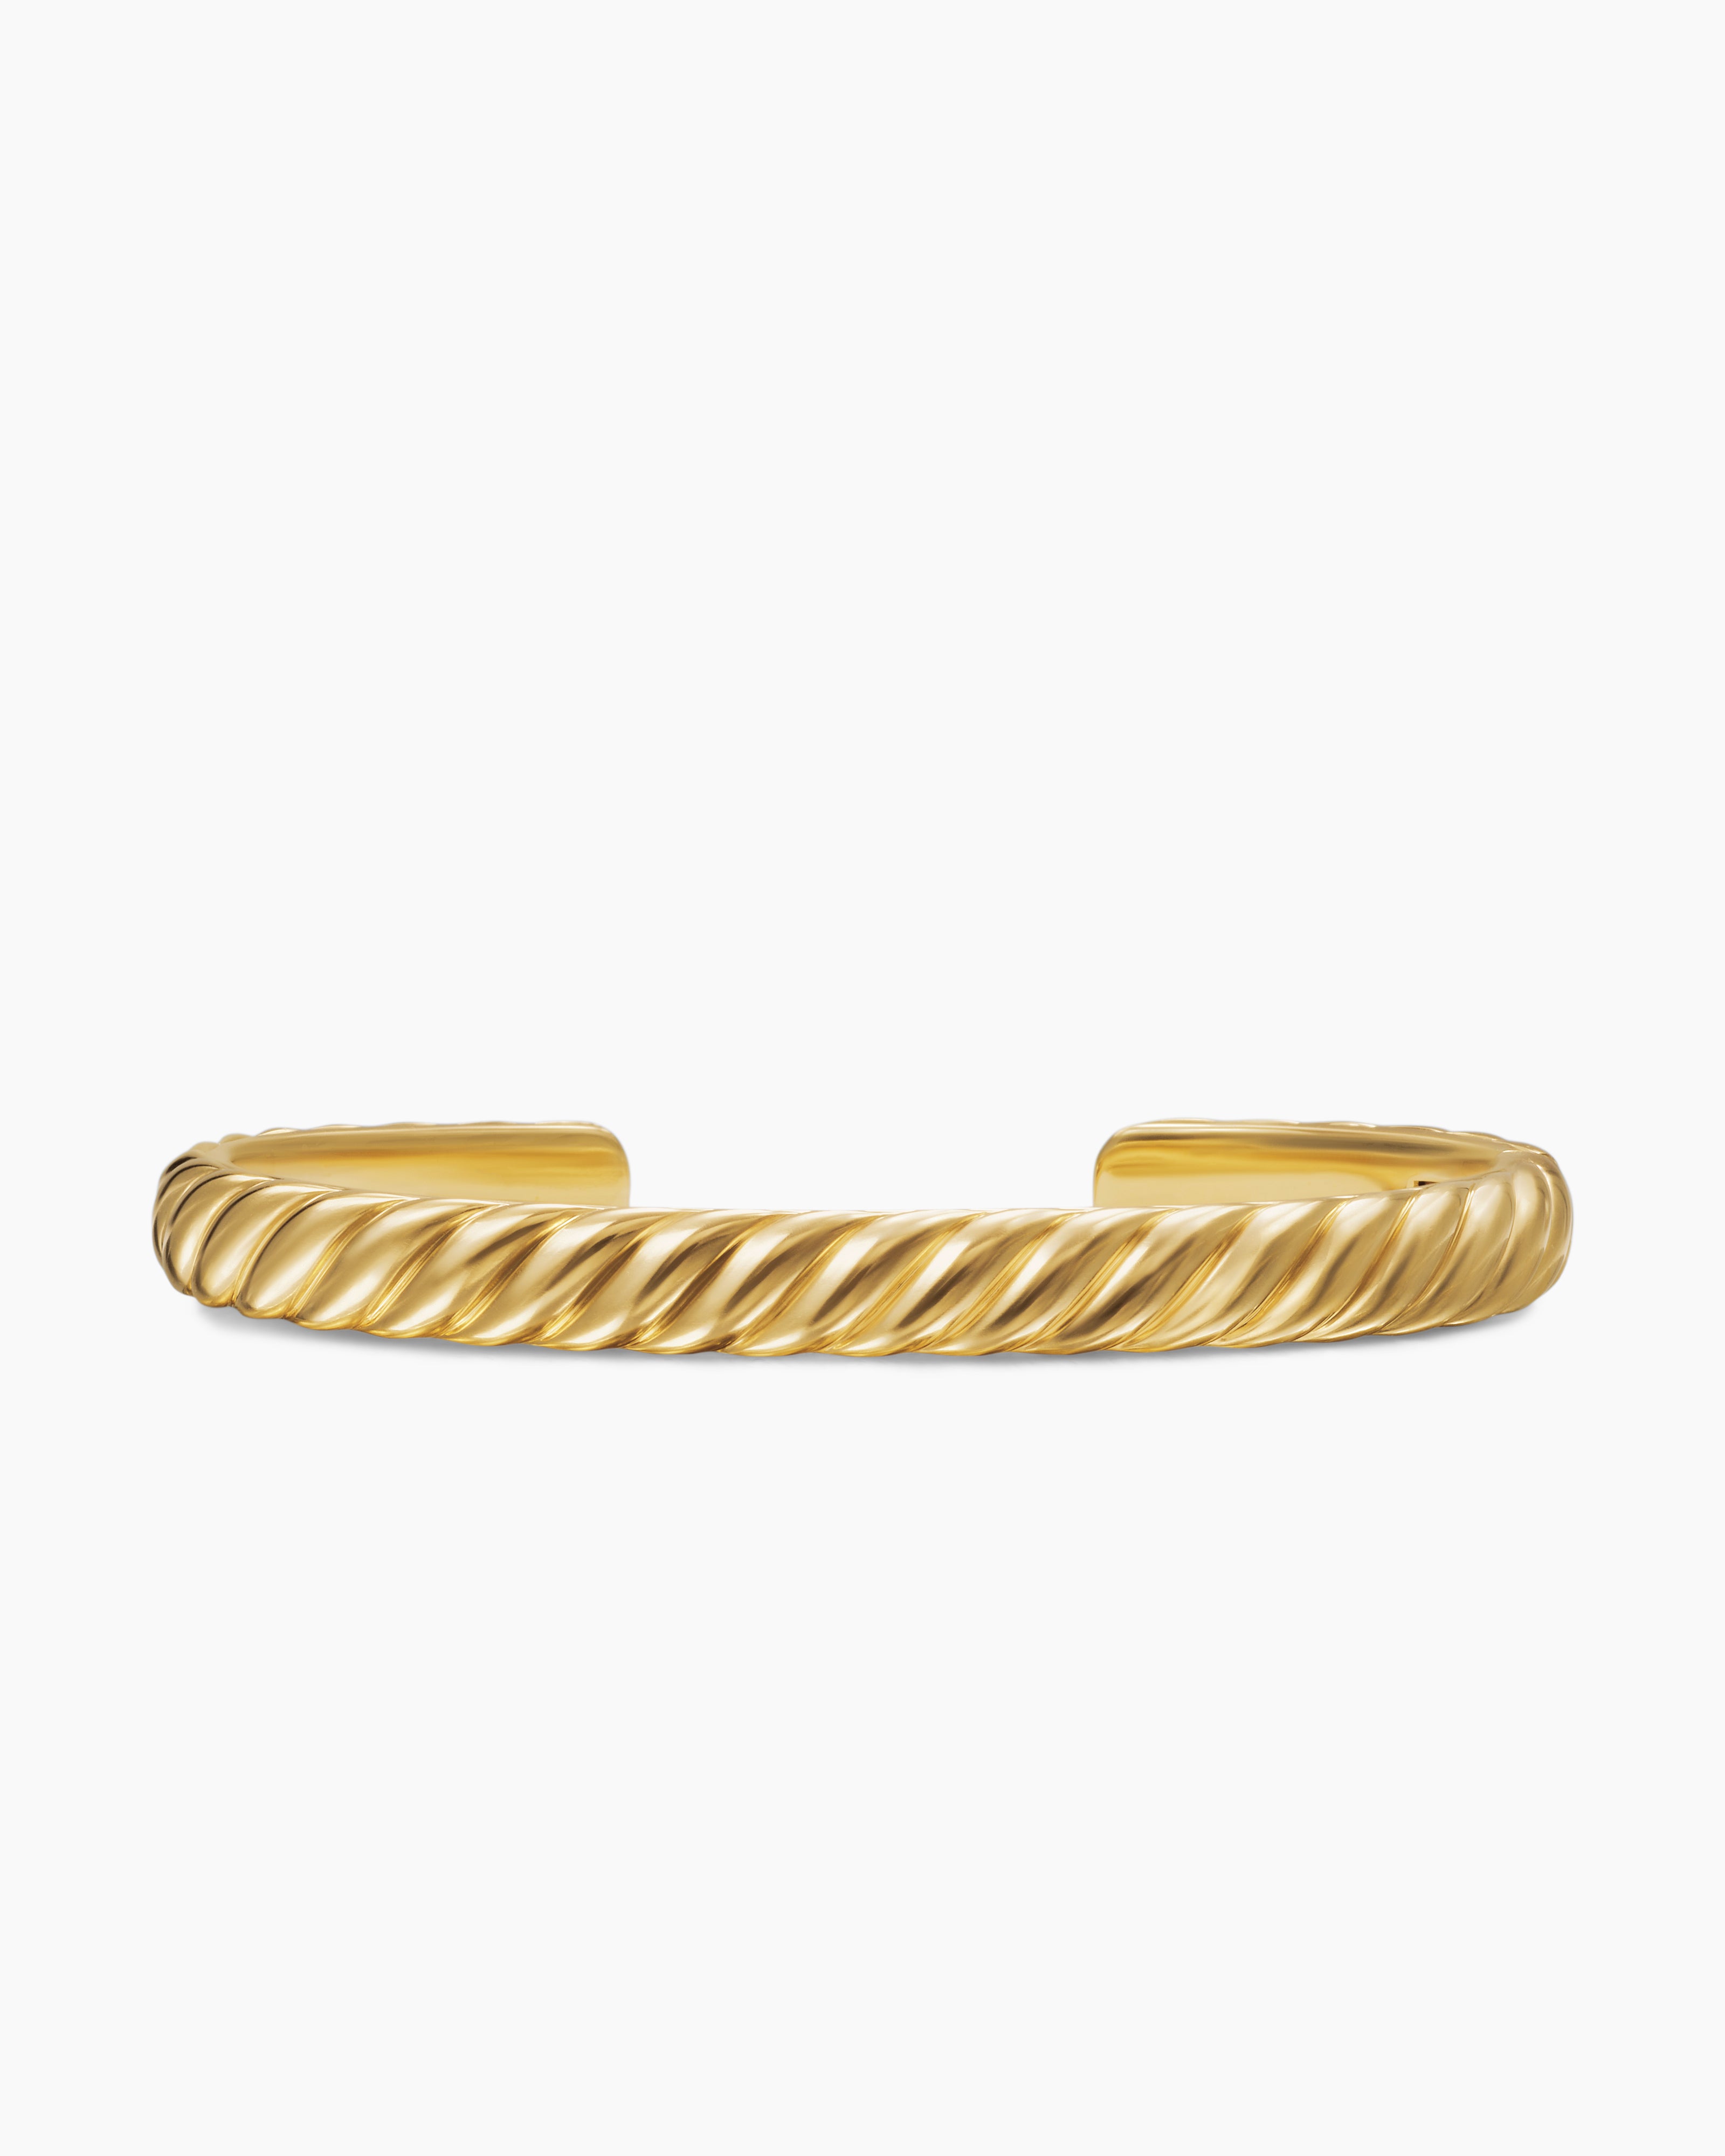 David Yurman Men's Cable Cuff Bracelet in 18K Gold, 7mm | Neiman Marcus